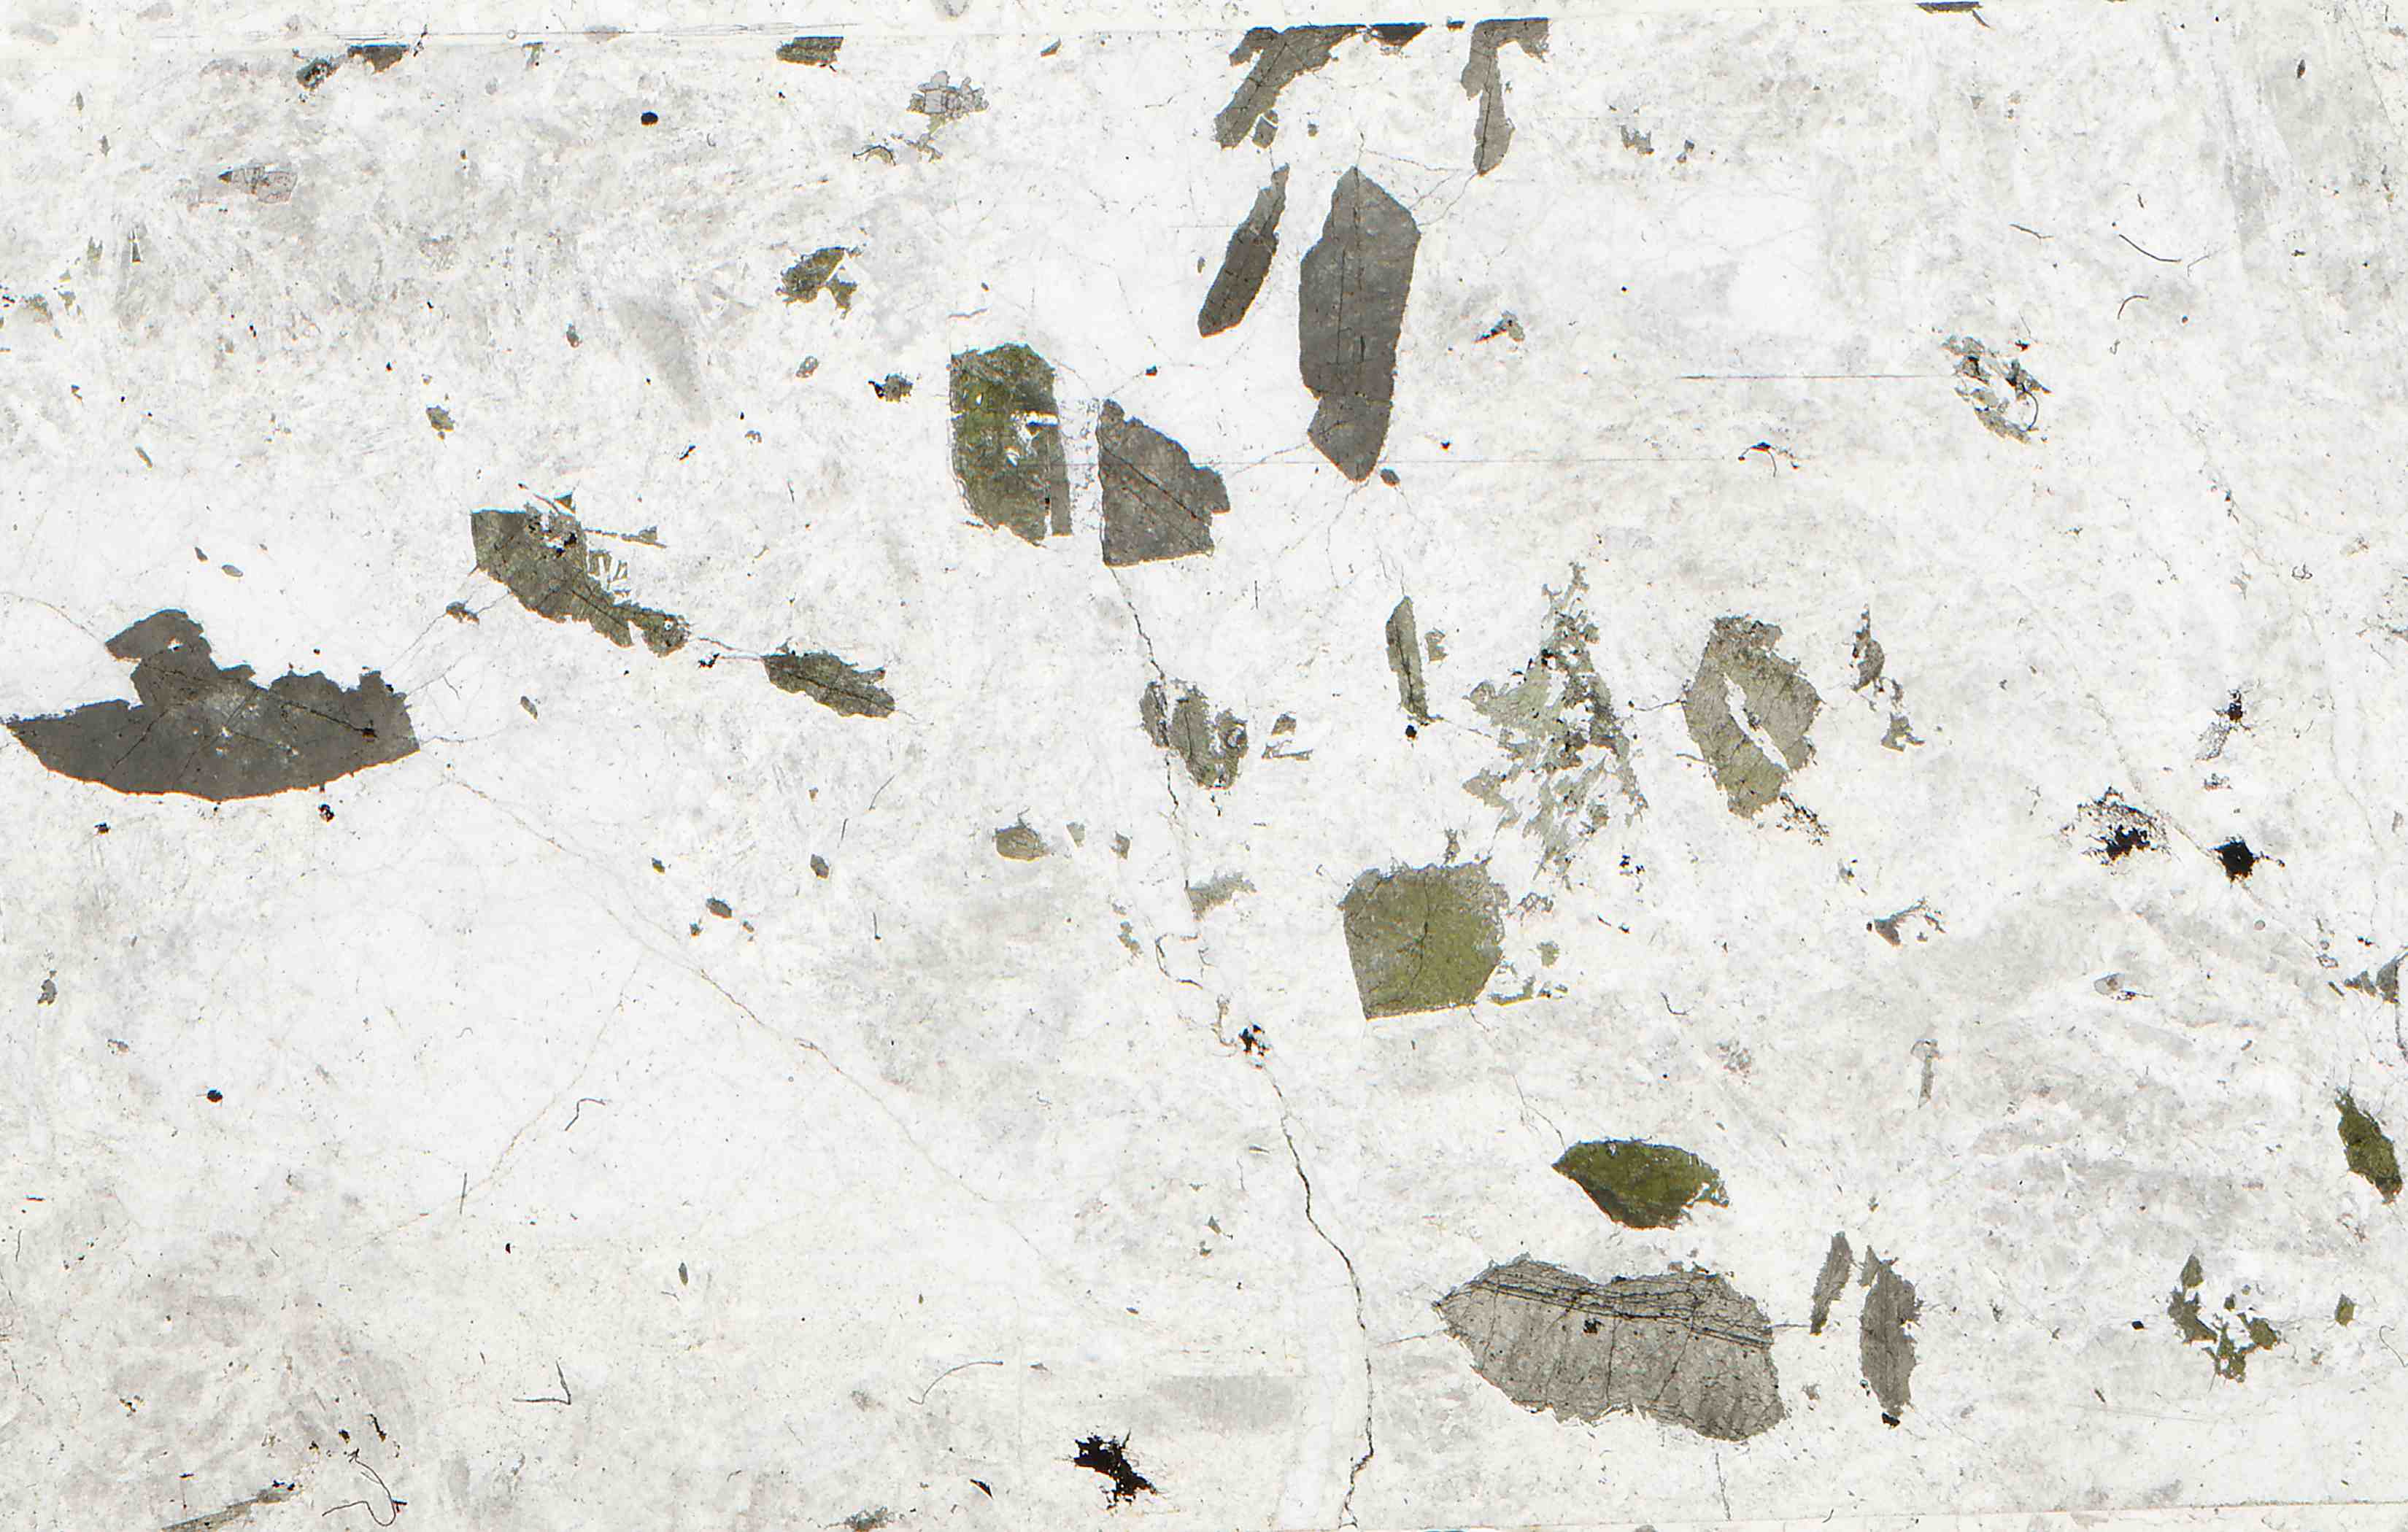 nepheline sodalite syenite in thin section